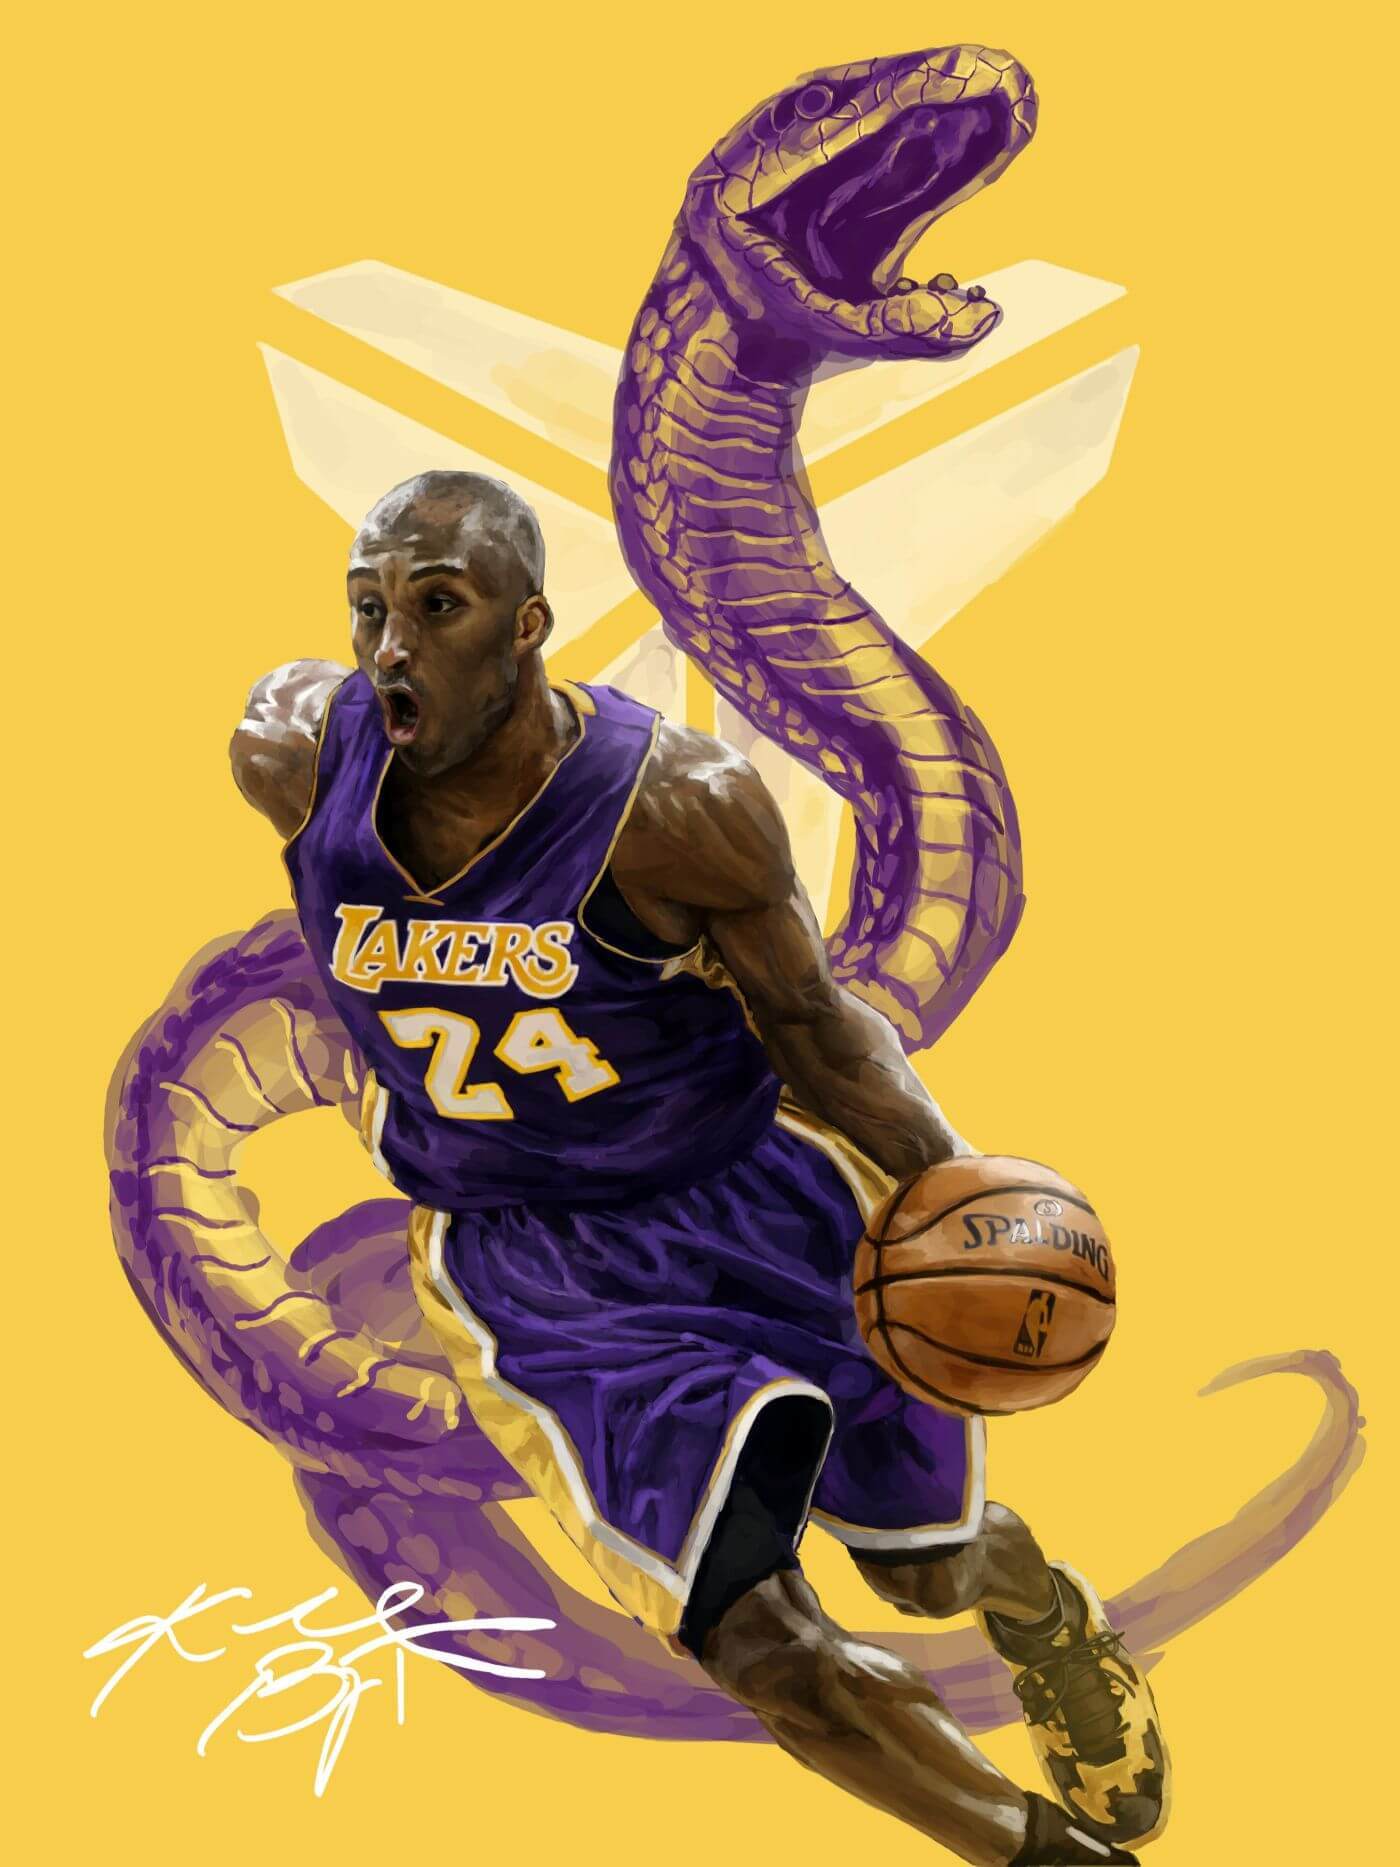 Los Angeles Lakers Kobe Bryant 24 Black Mamba NBA Basketball